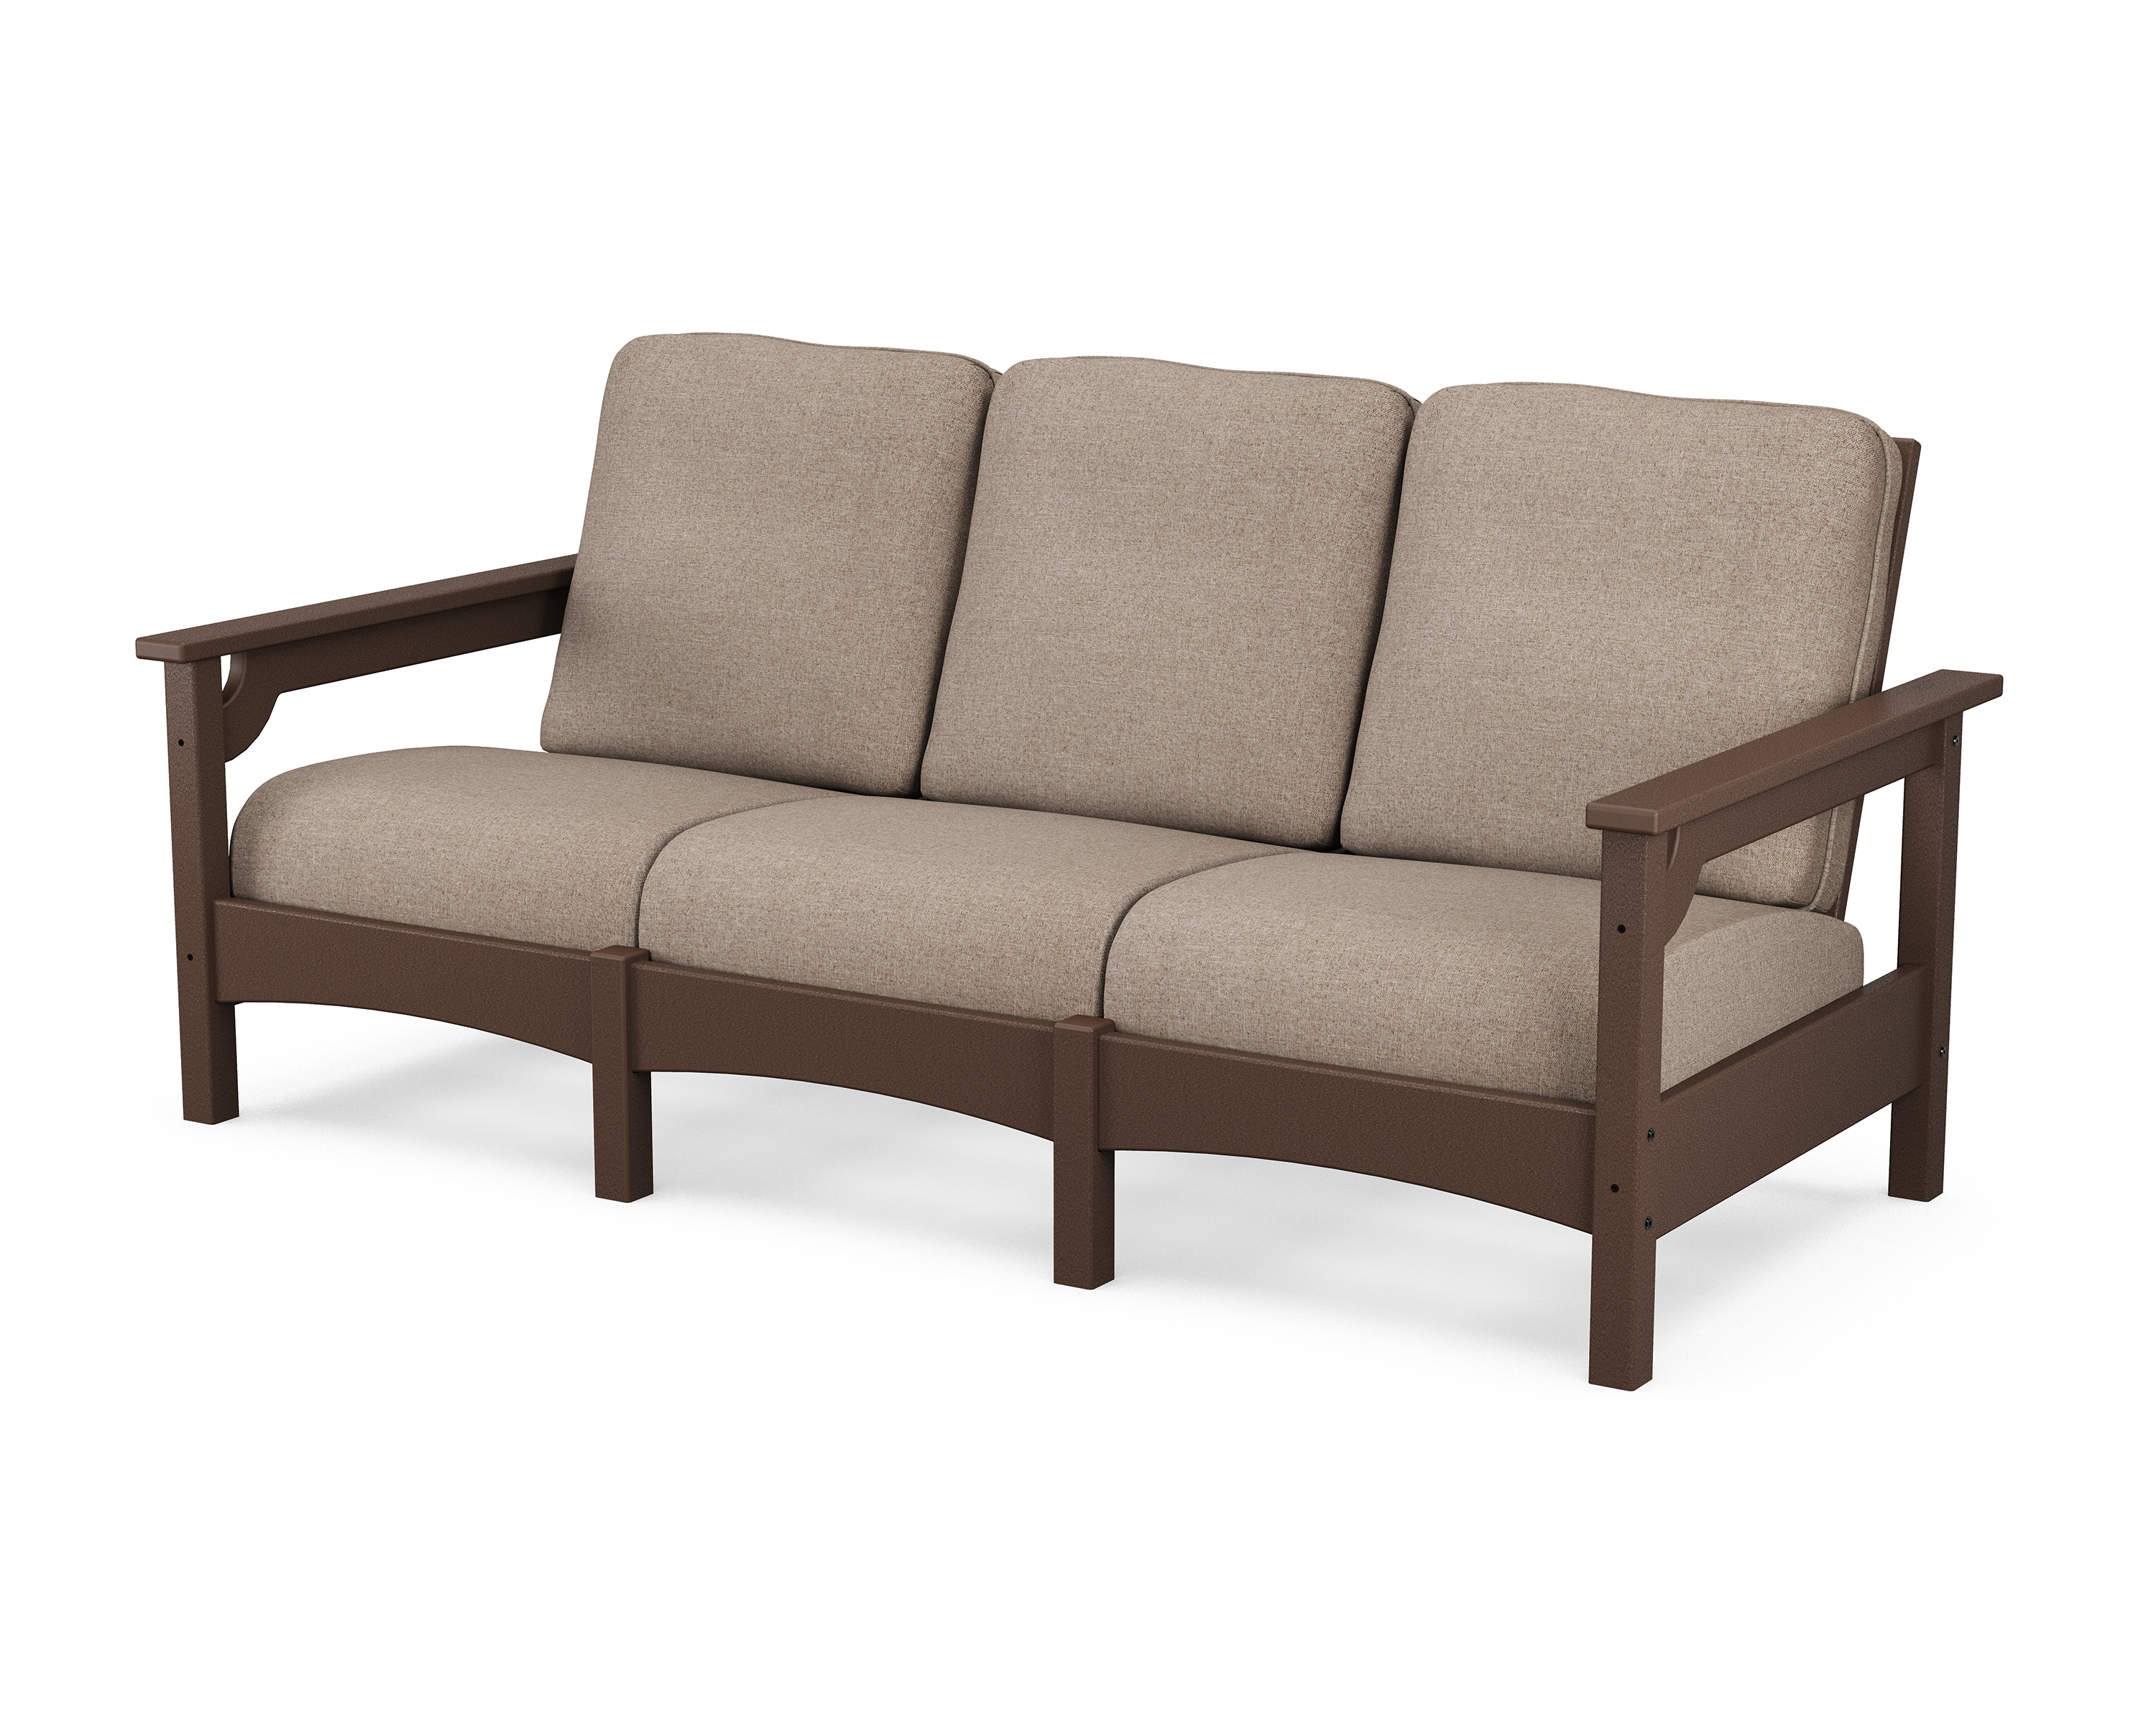 club sofa in mahogany / spiced burlap product image